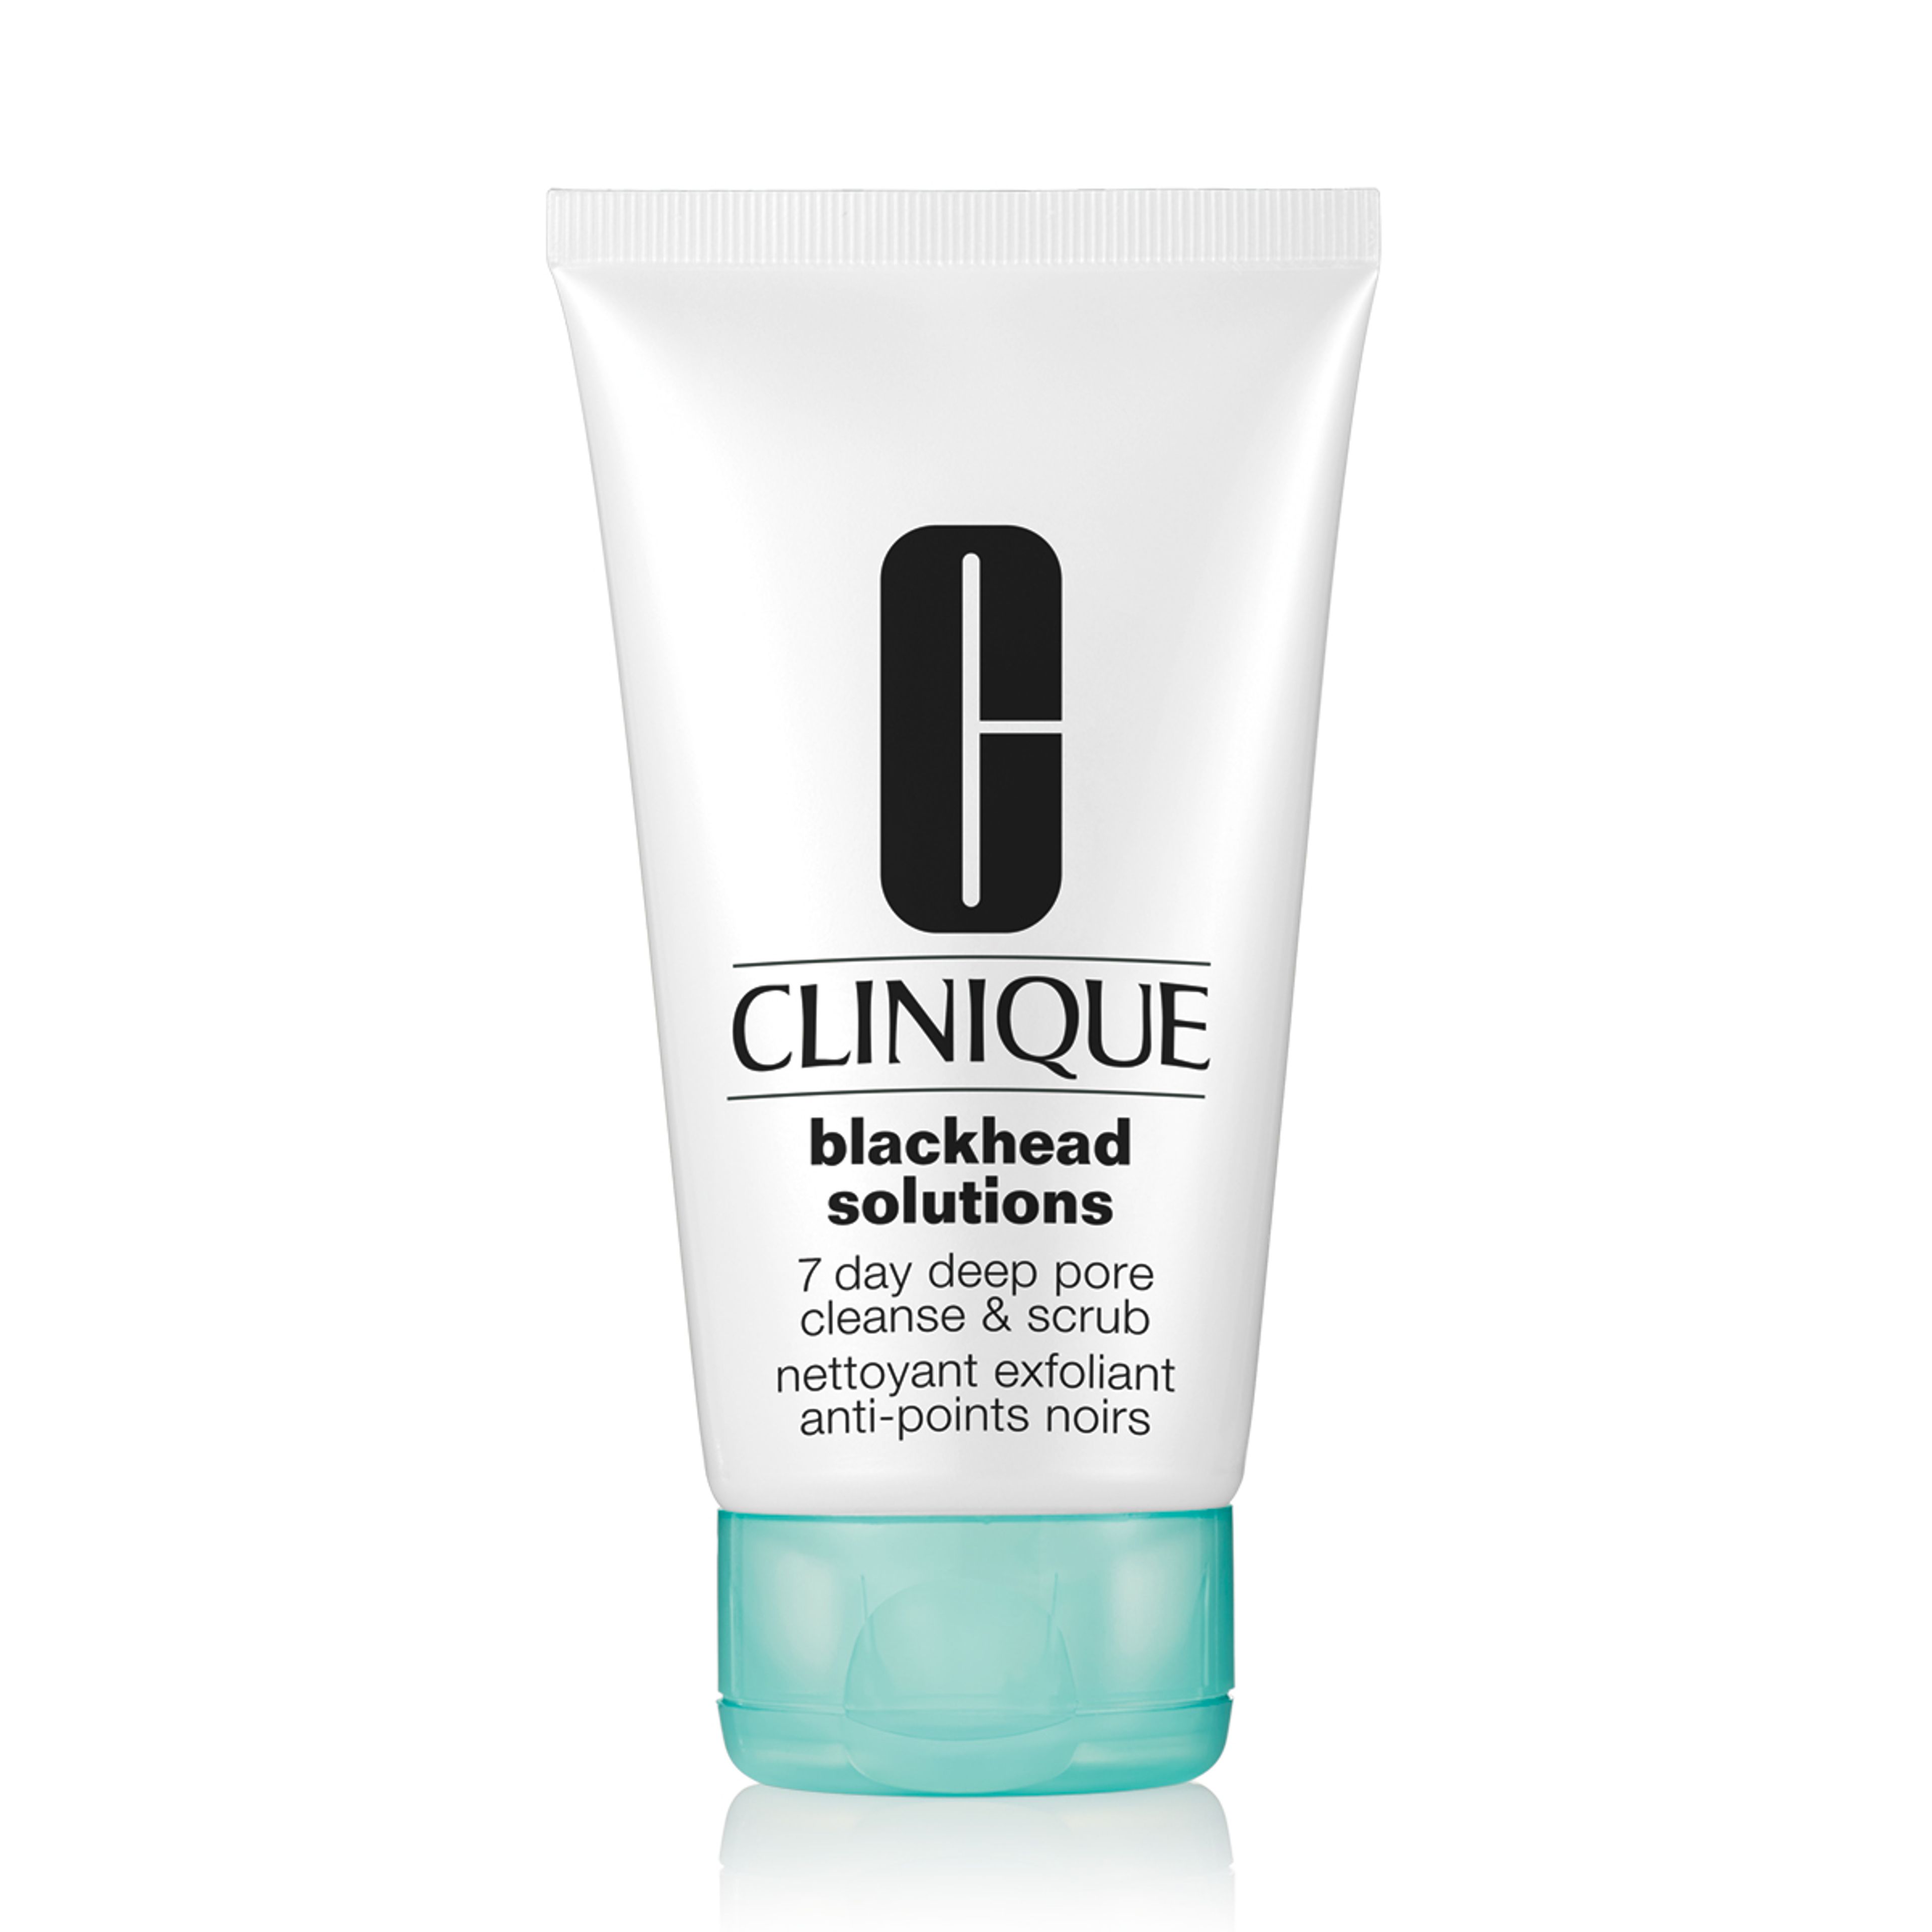 Clinique Blackhead Solutions 7 Day Deep Pore Cleanse & Scrub 1